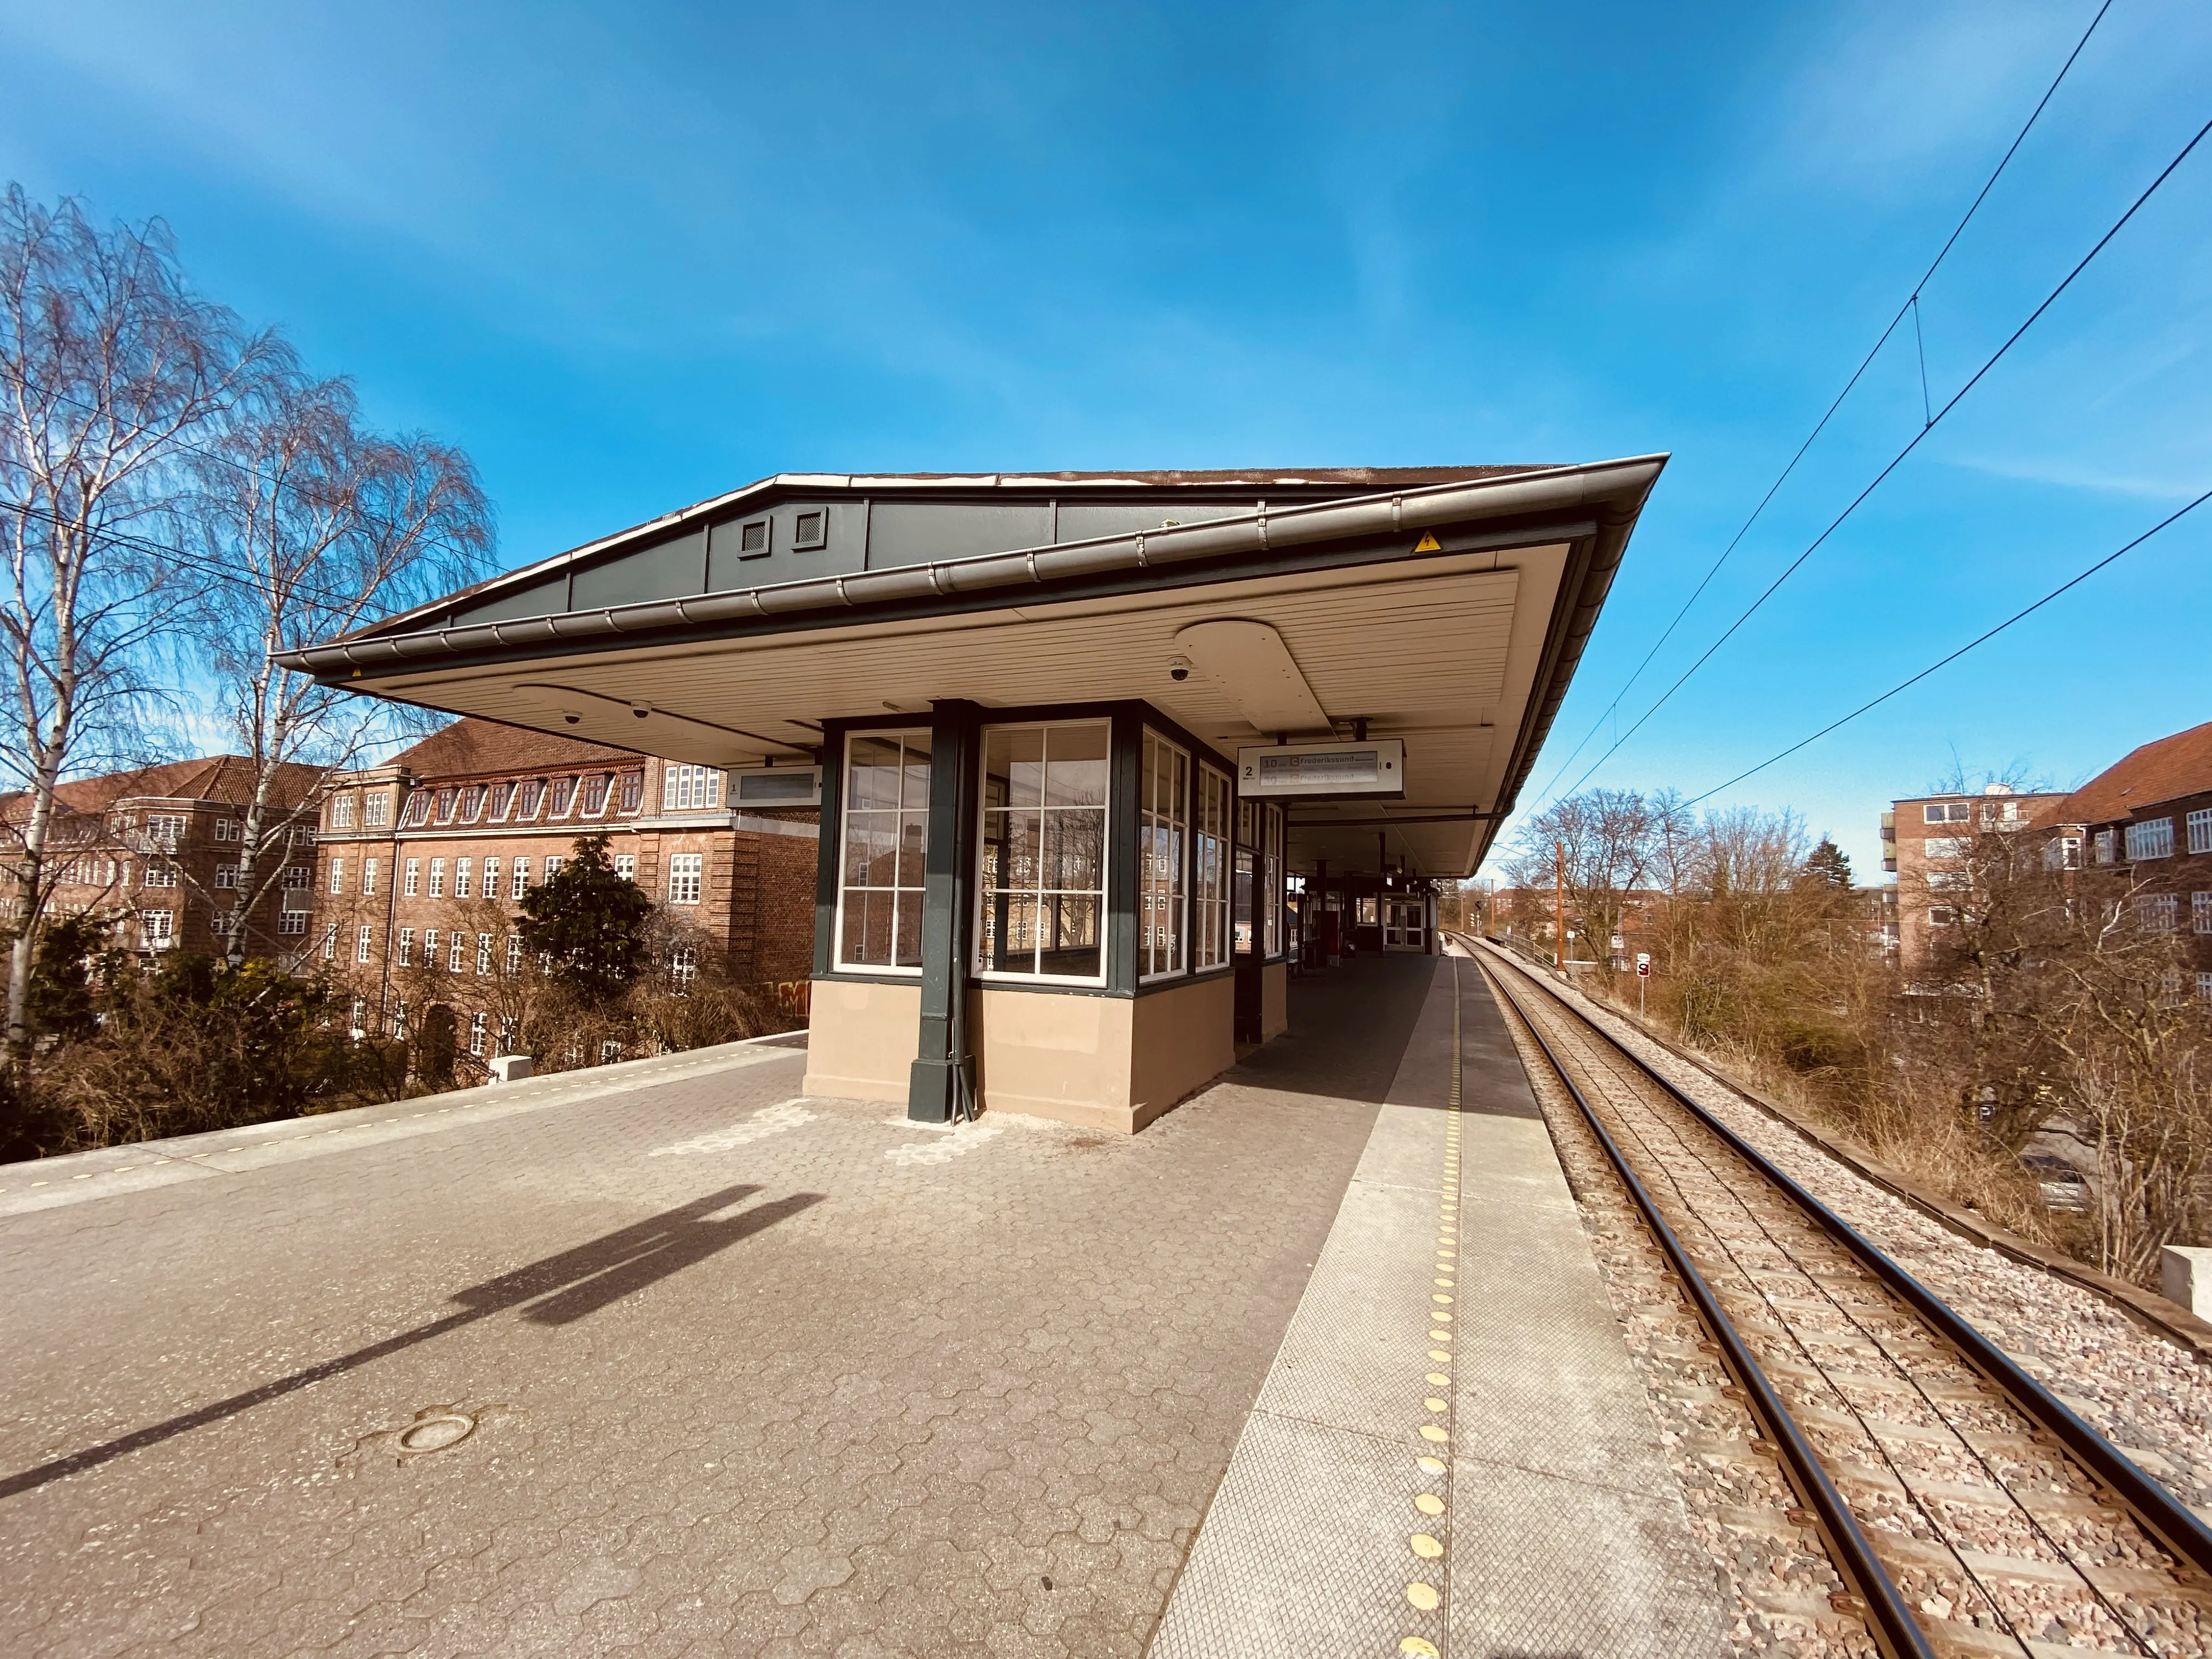 Peter Bangs Vej Station.